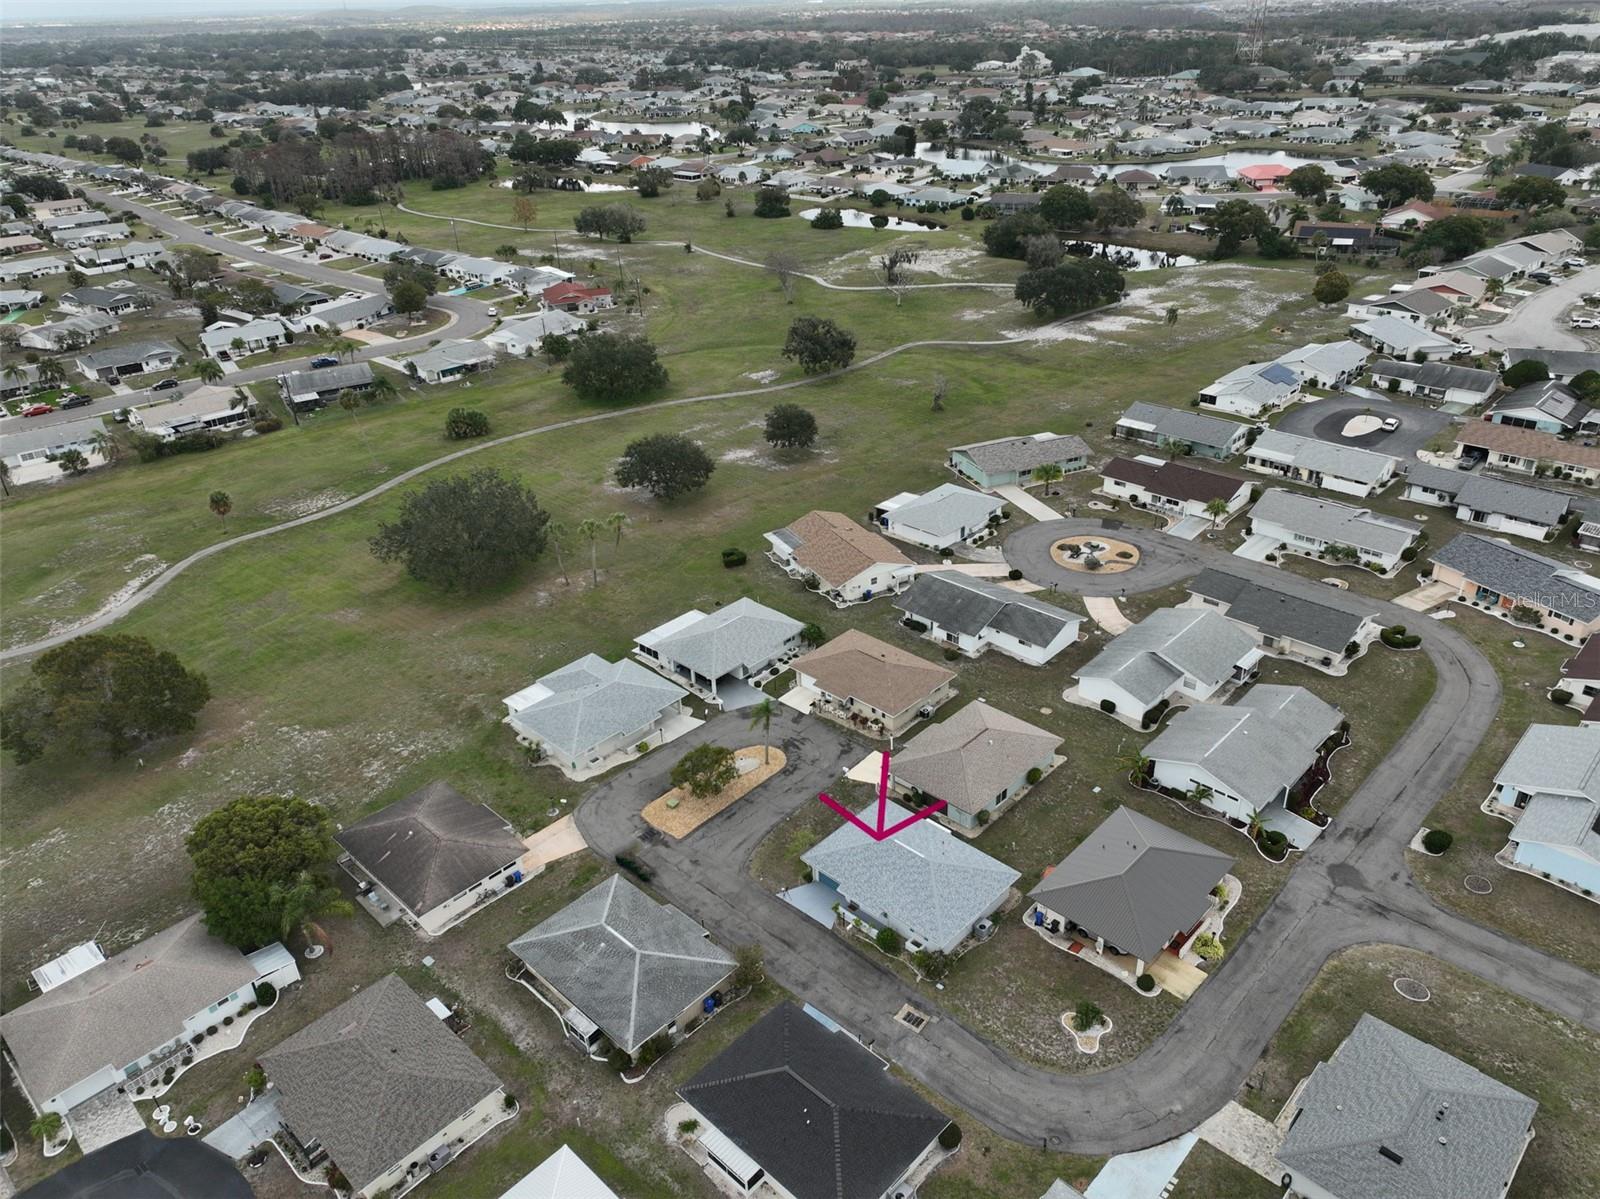 Aerial view of home & neighborhood